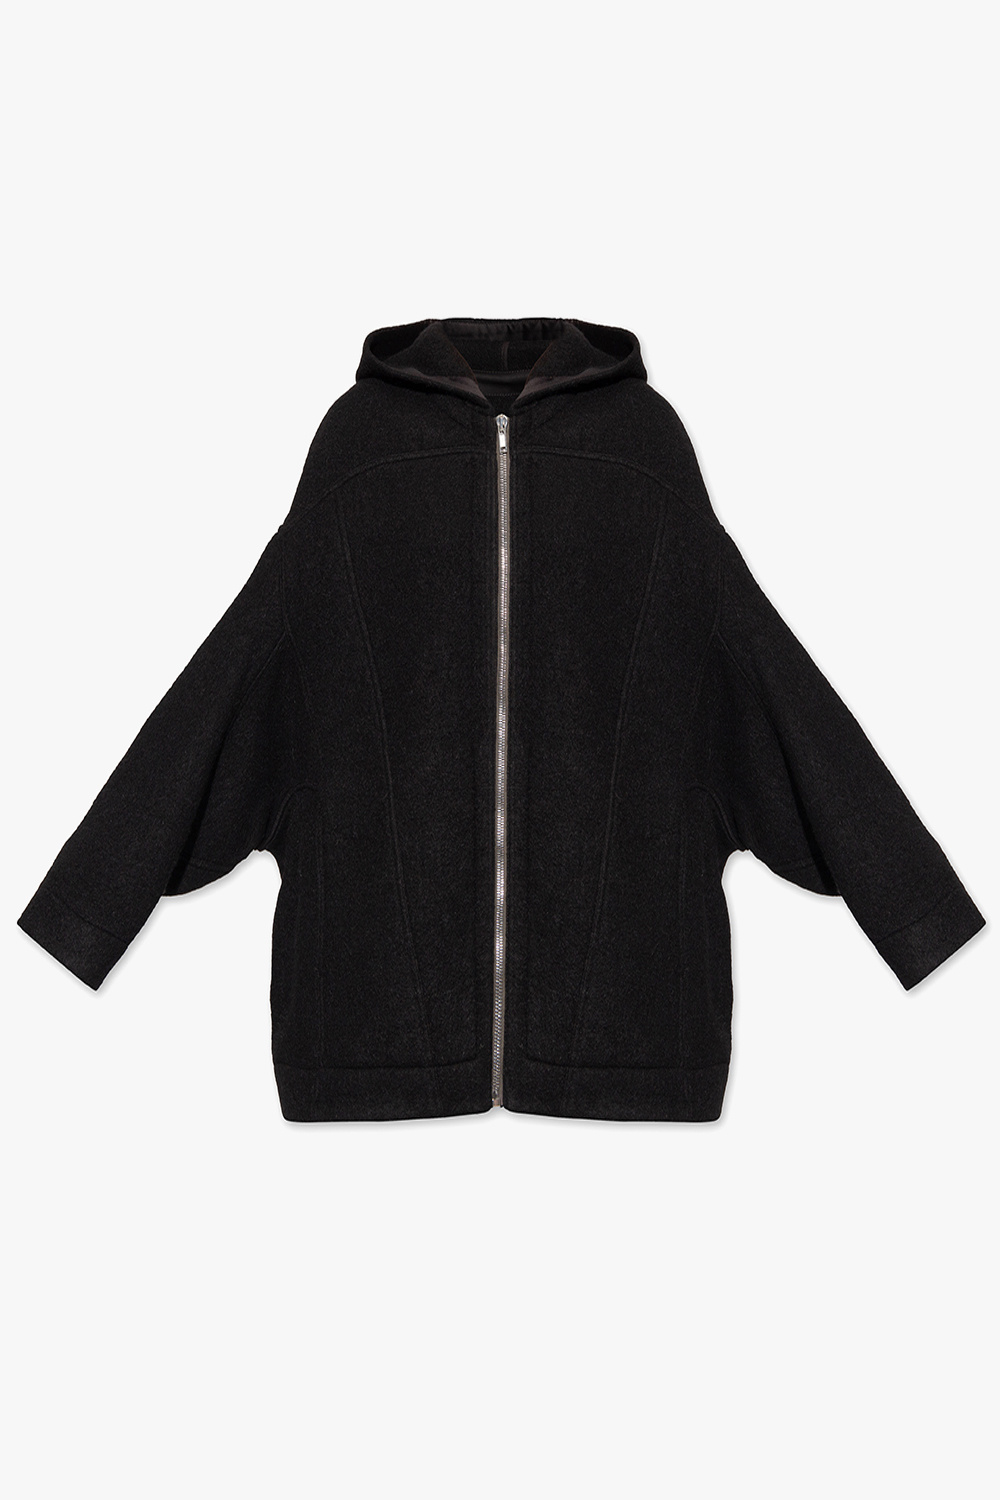 Rick Owens Wool jacket | Women's Clothing | Vitkac